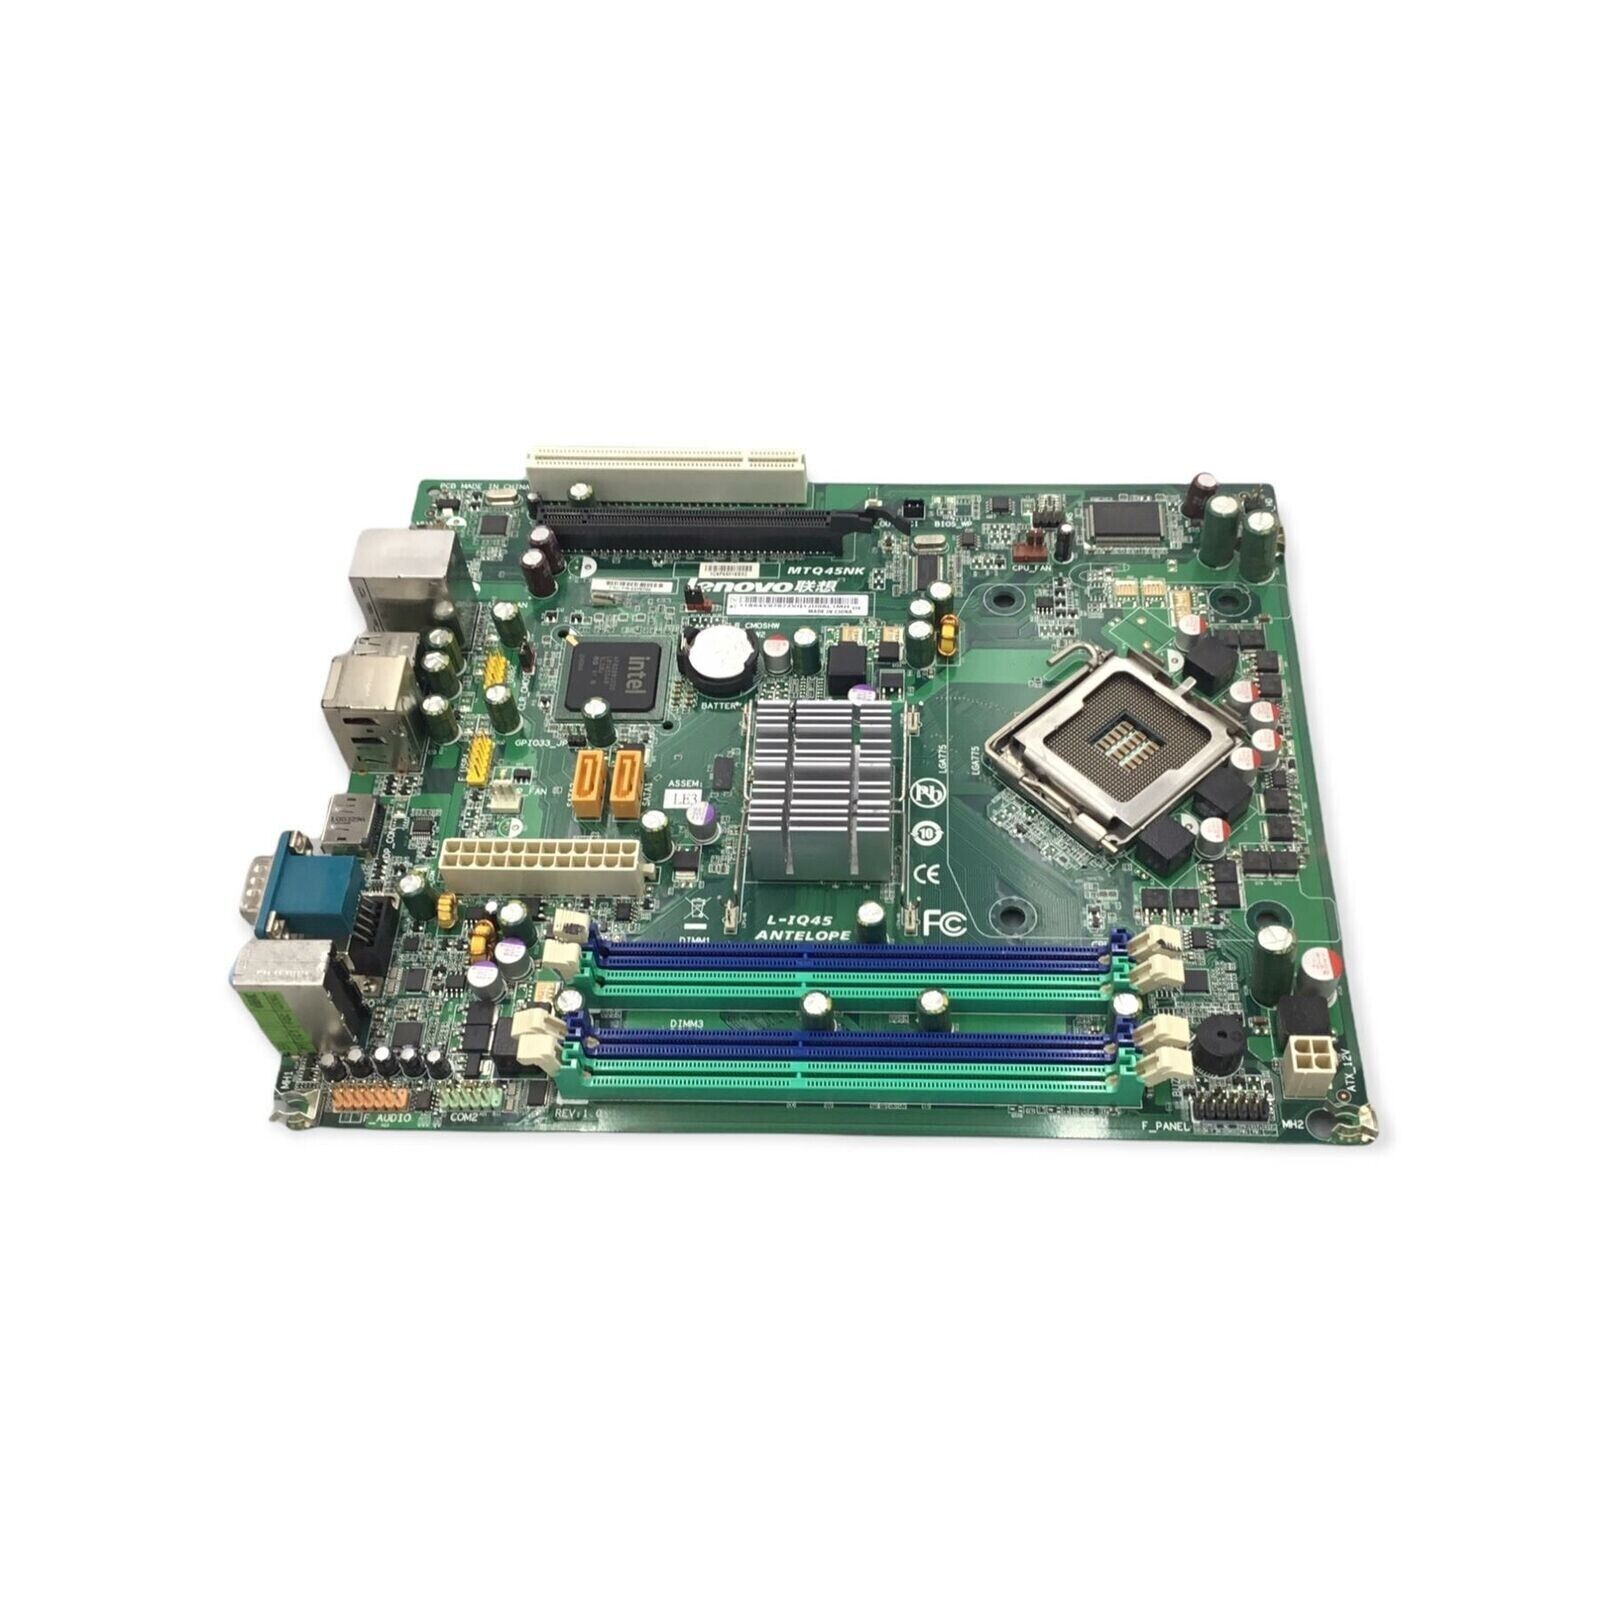 ✔️  Lenovo Thinkcentre M58 LGA775 Motherboard L-IQ45 Antelope 46R1517 TESTED